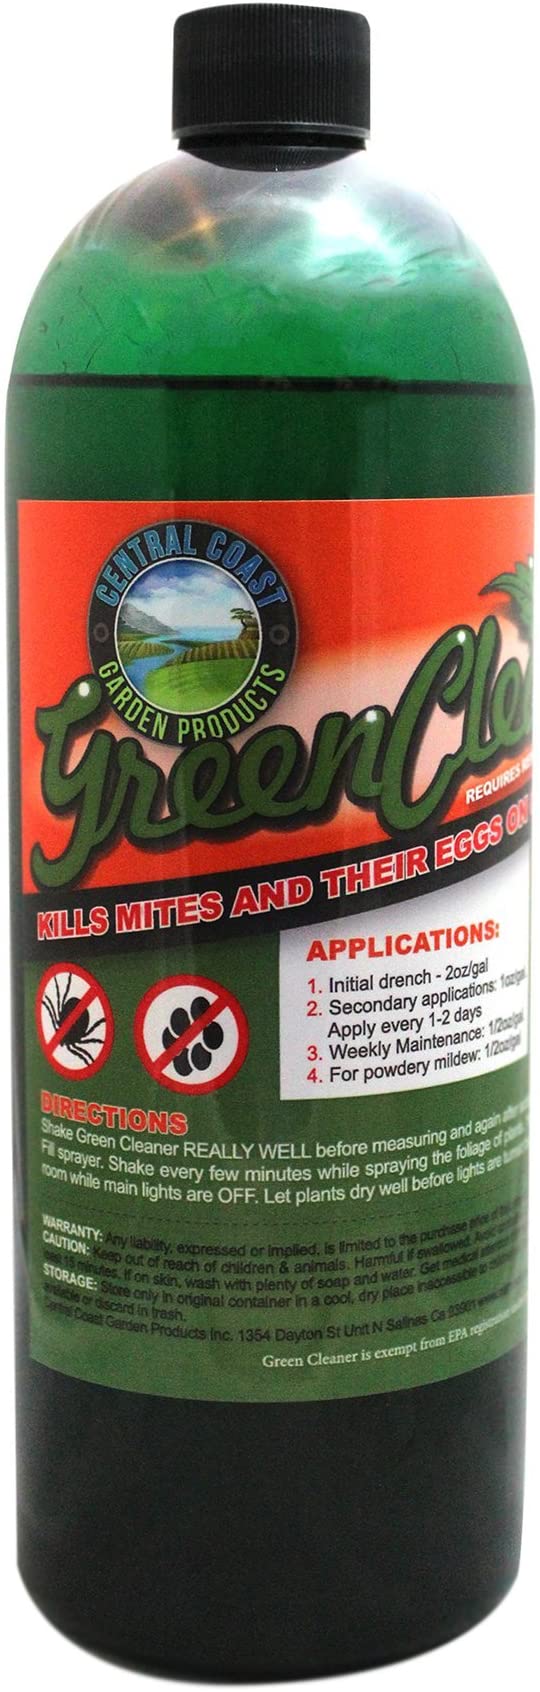 Green Cleaner CCGC1032, 32 oz, Home Pest Concentrate, 1 Quart, Liquid